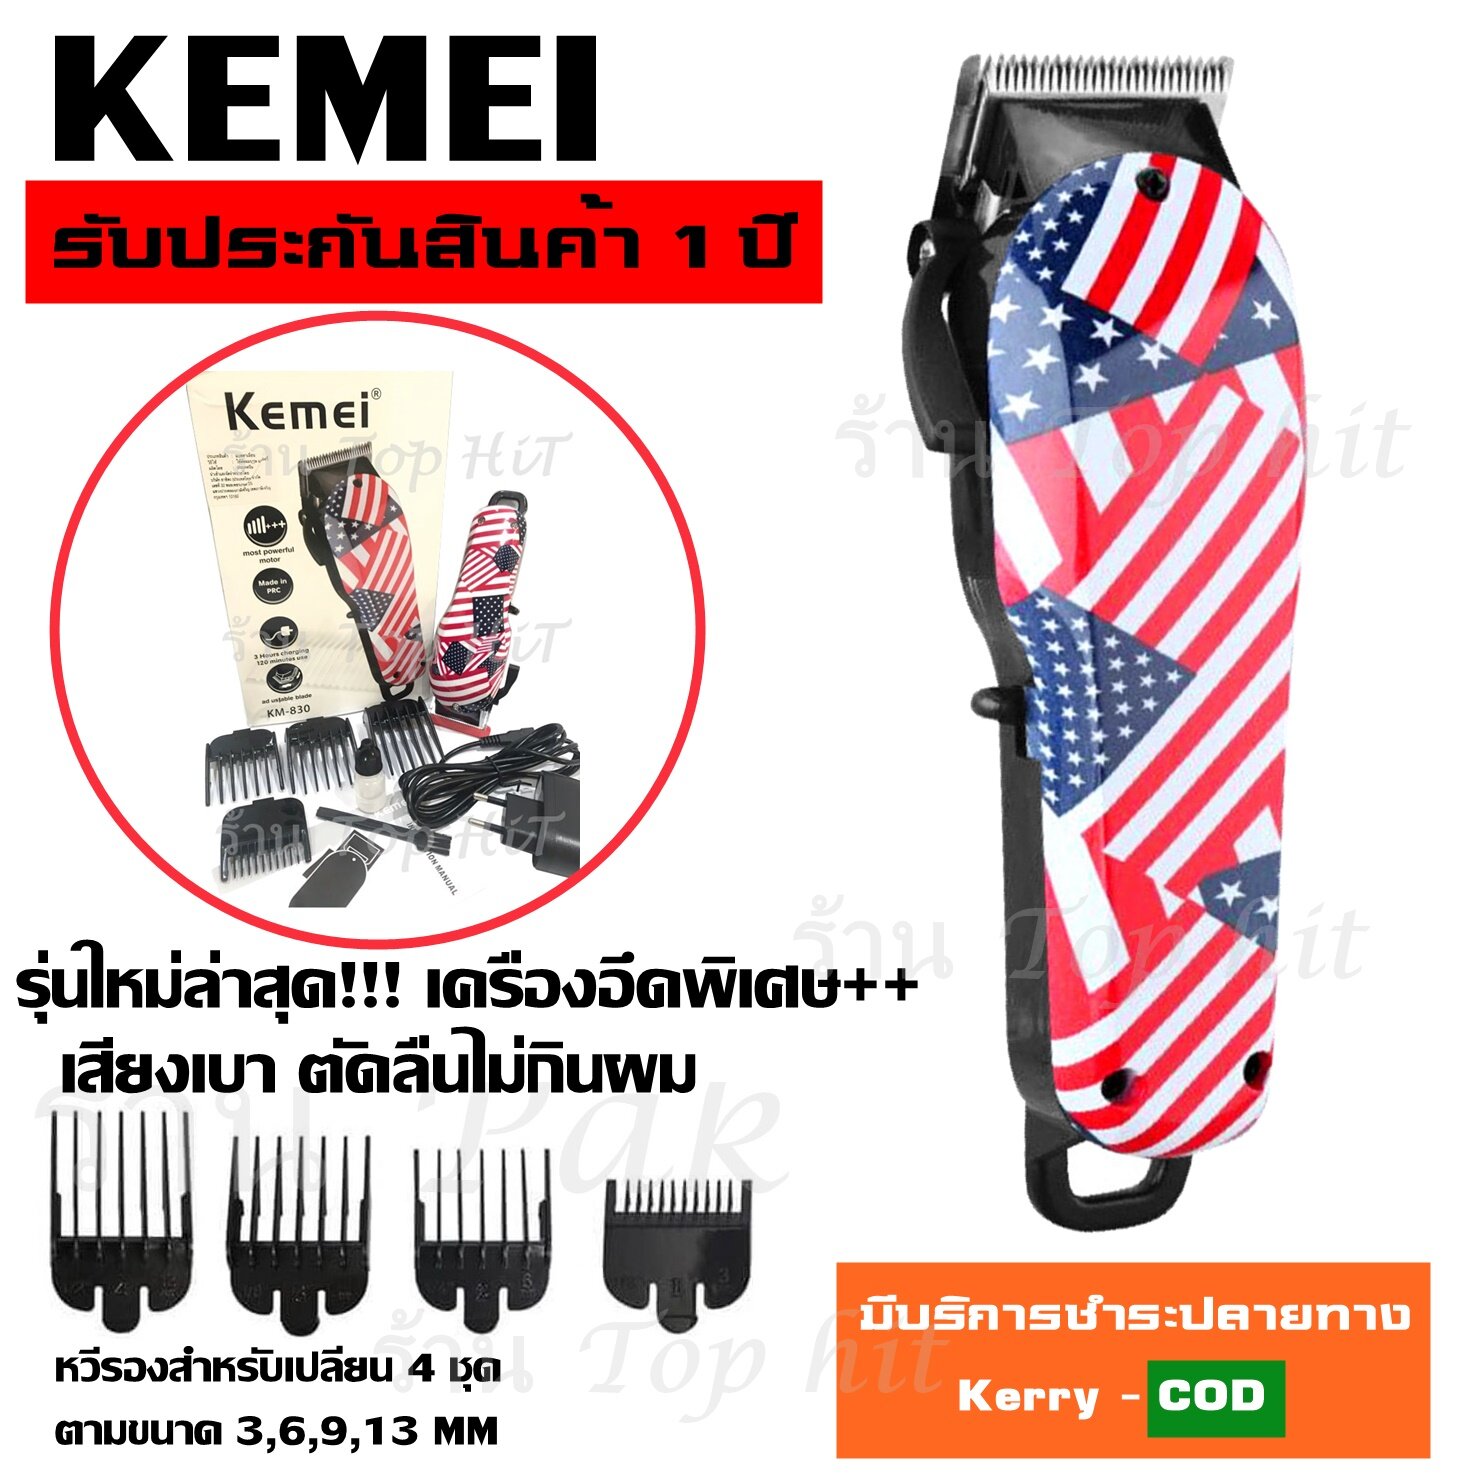 Top Choose ส่งสินค้าวันต่อวัน ! ปัตตาเลี่ยนตัดผม รุ่นใหม่ Kemei KM-830 KM830 ปัตตาเลี่ยนตัดผมมืออาชีพ ไร้สาย แบตตาเลียนตัดผม ลายธงชาติ / KM831 KM-831